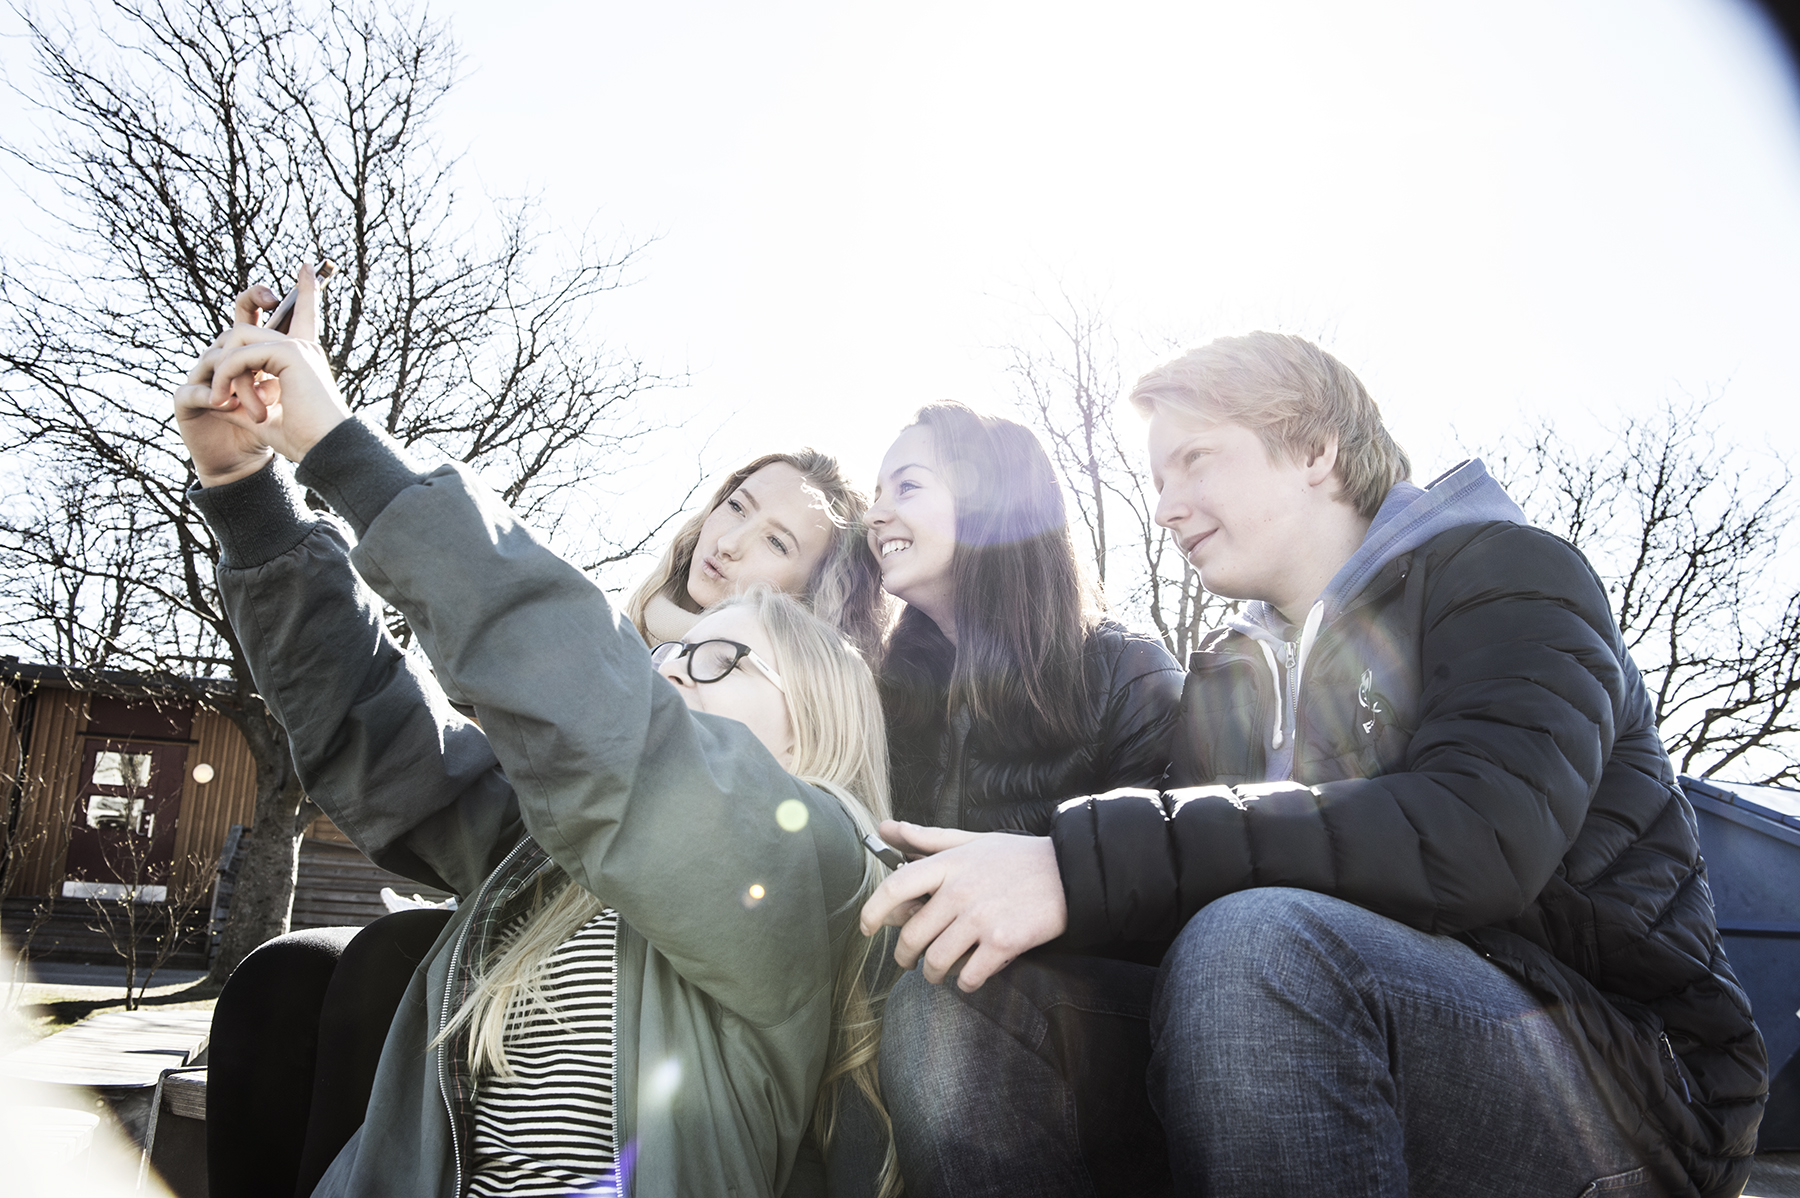 Ungdom tar selfie med mobil ute. Foto Medietilsynet